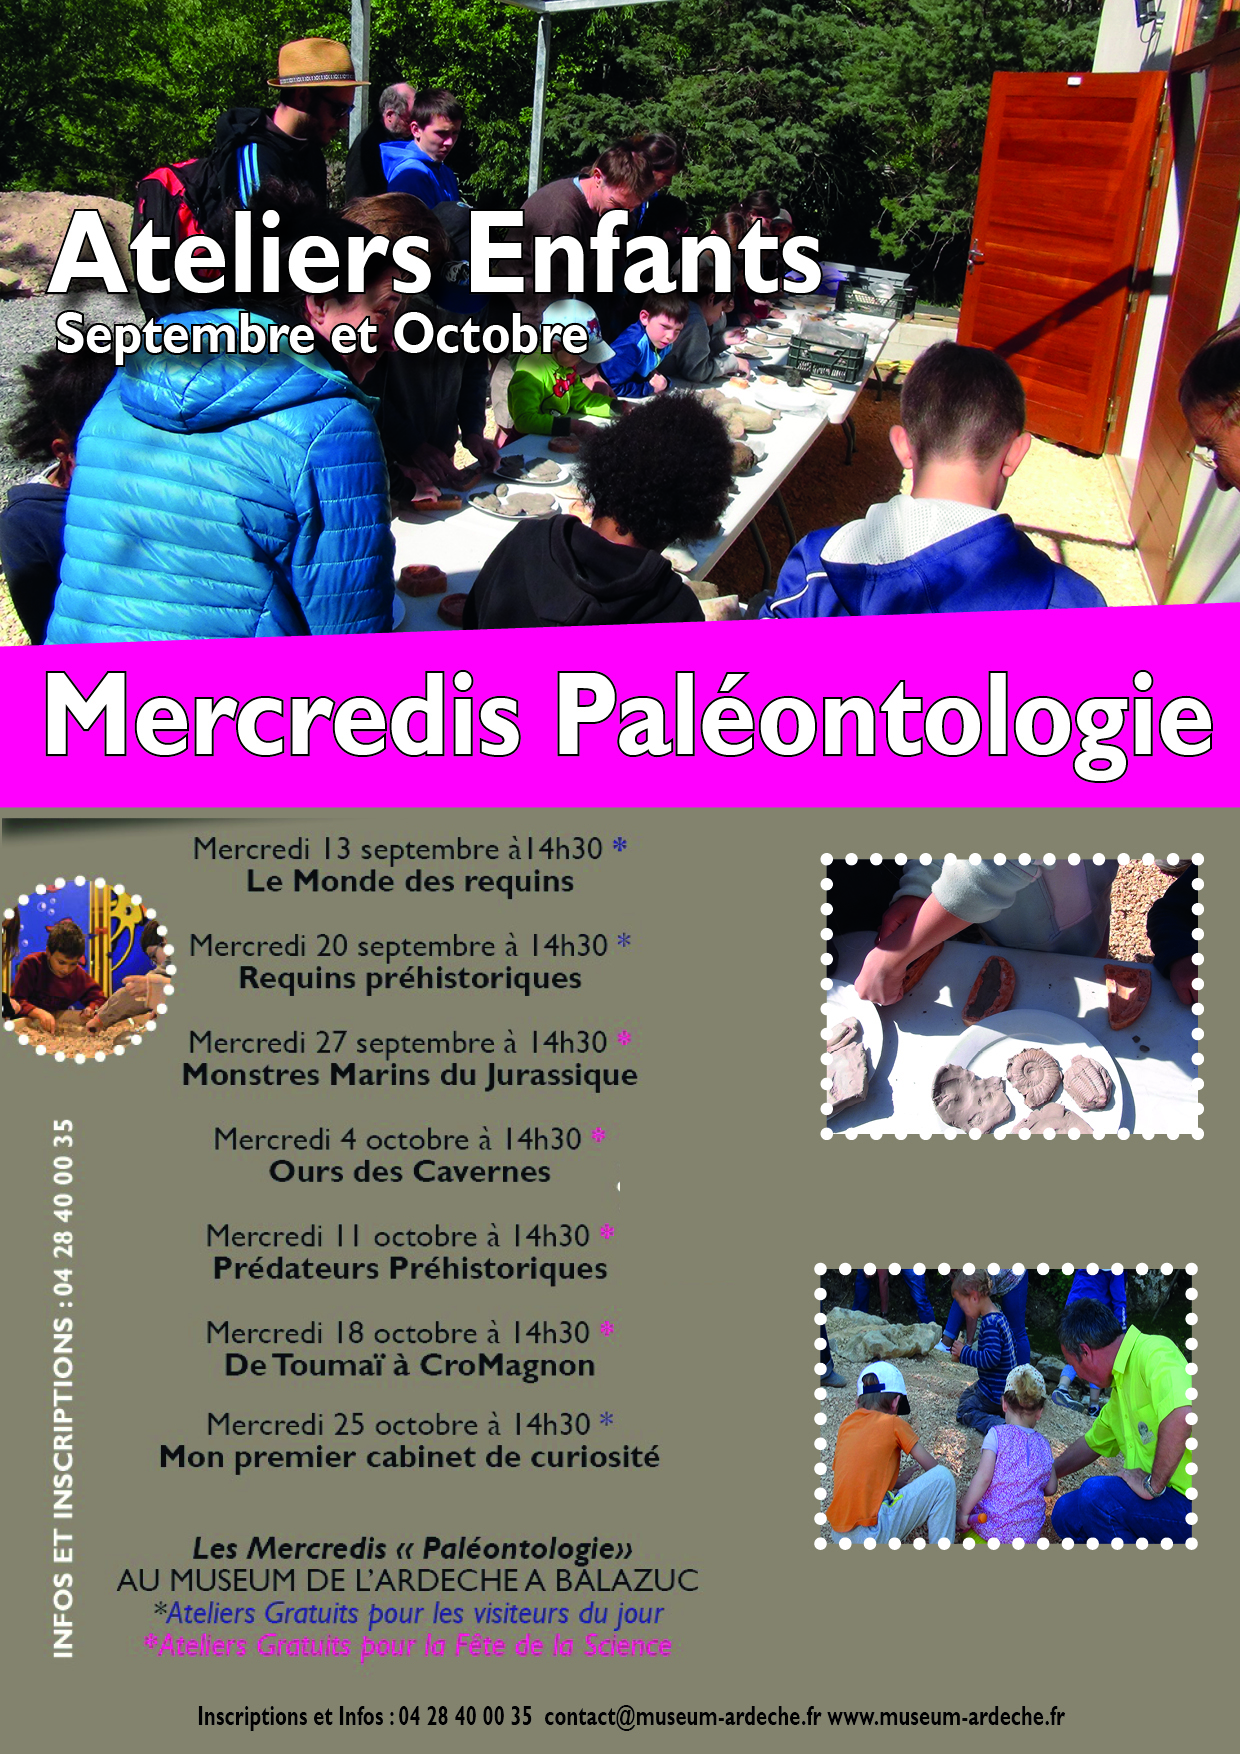 Les Mercredis Paléontologie